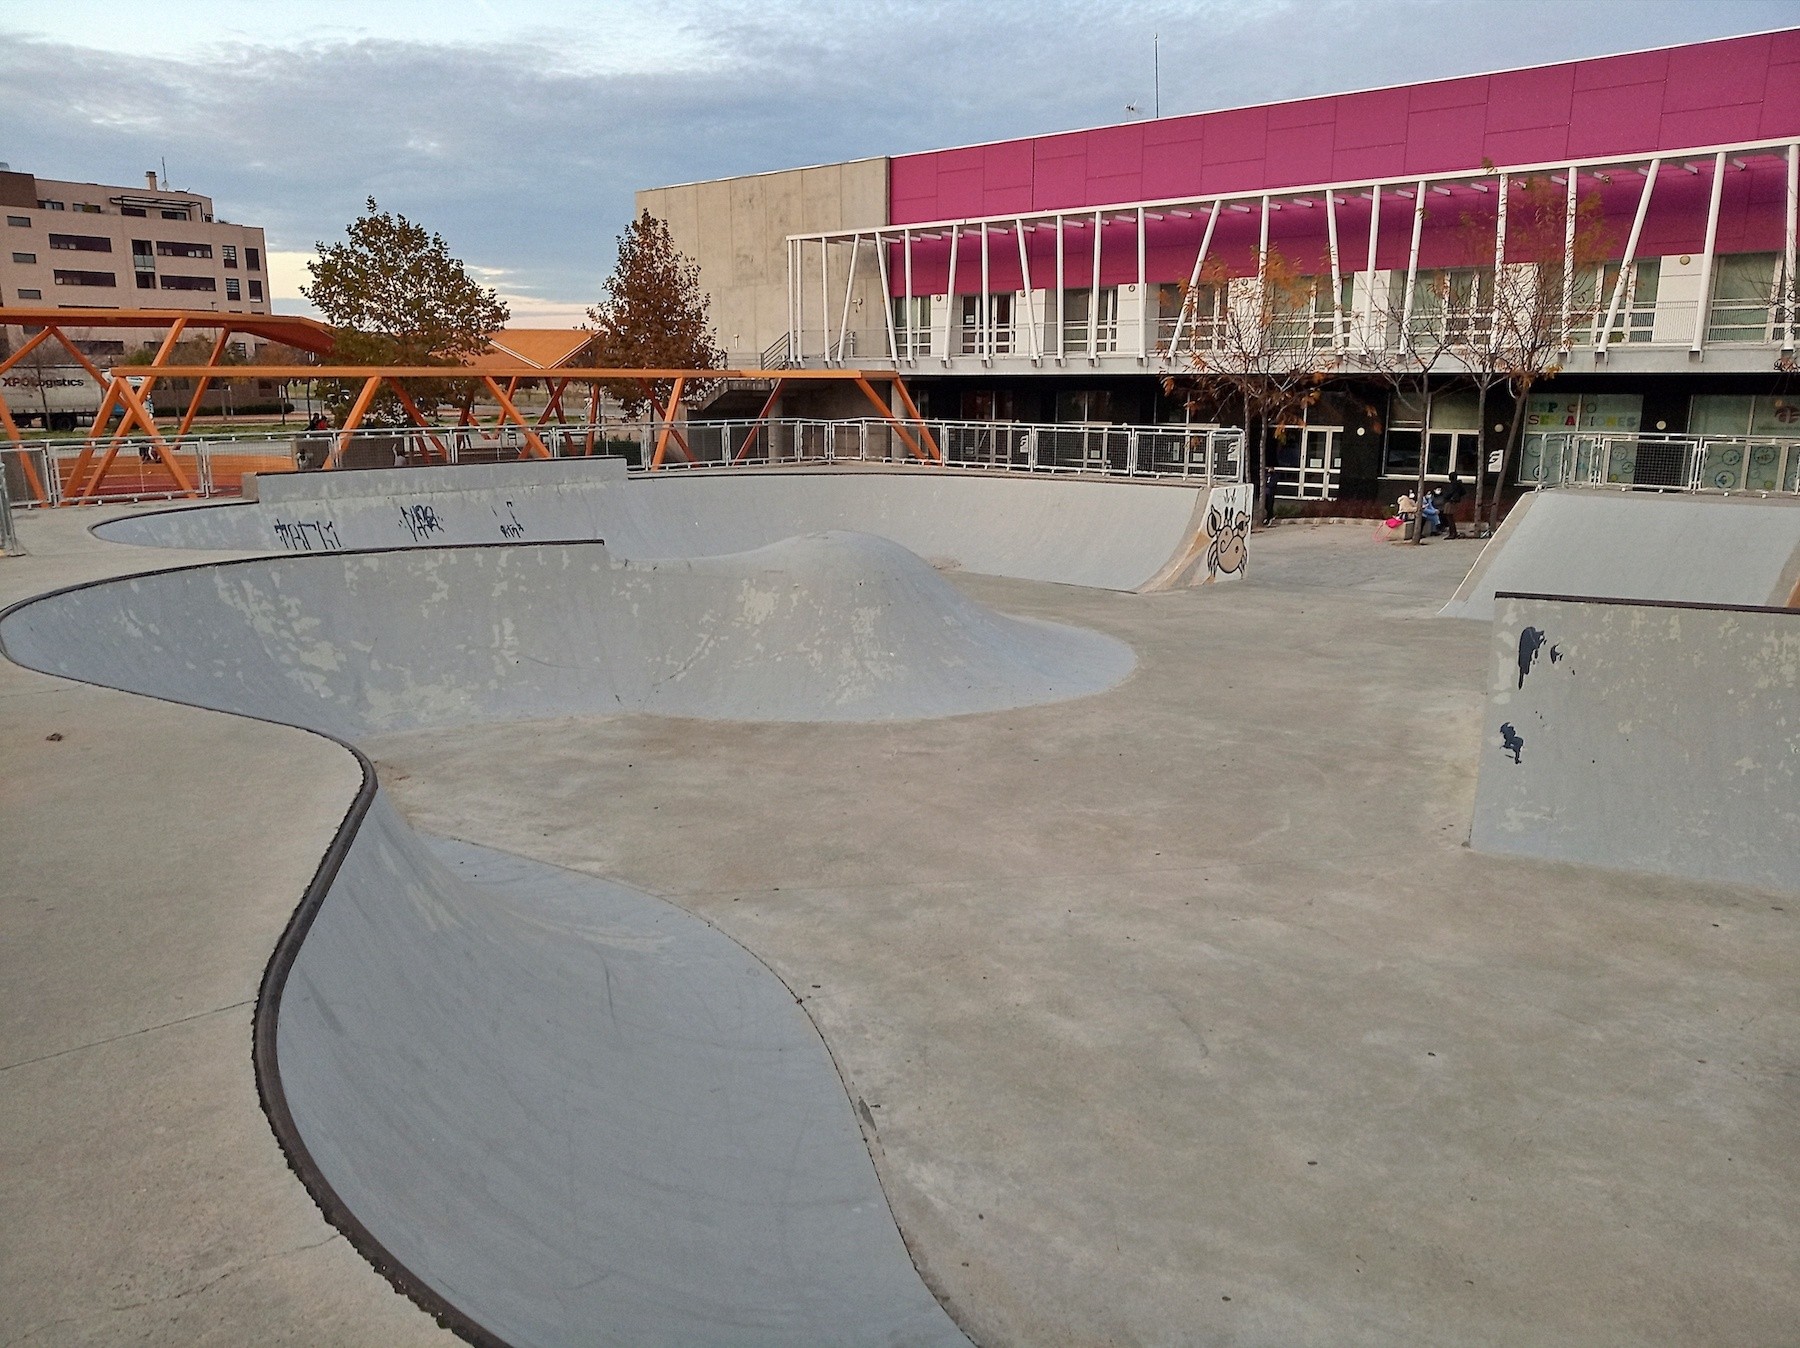 El Eje skatepark